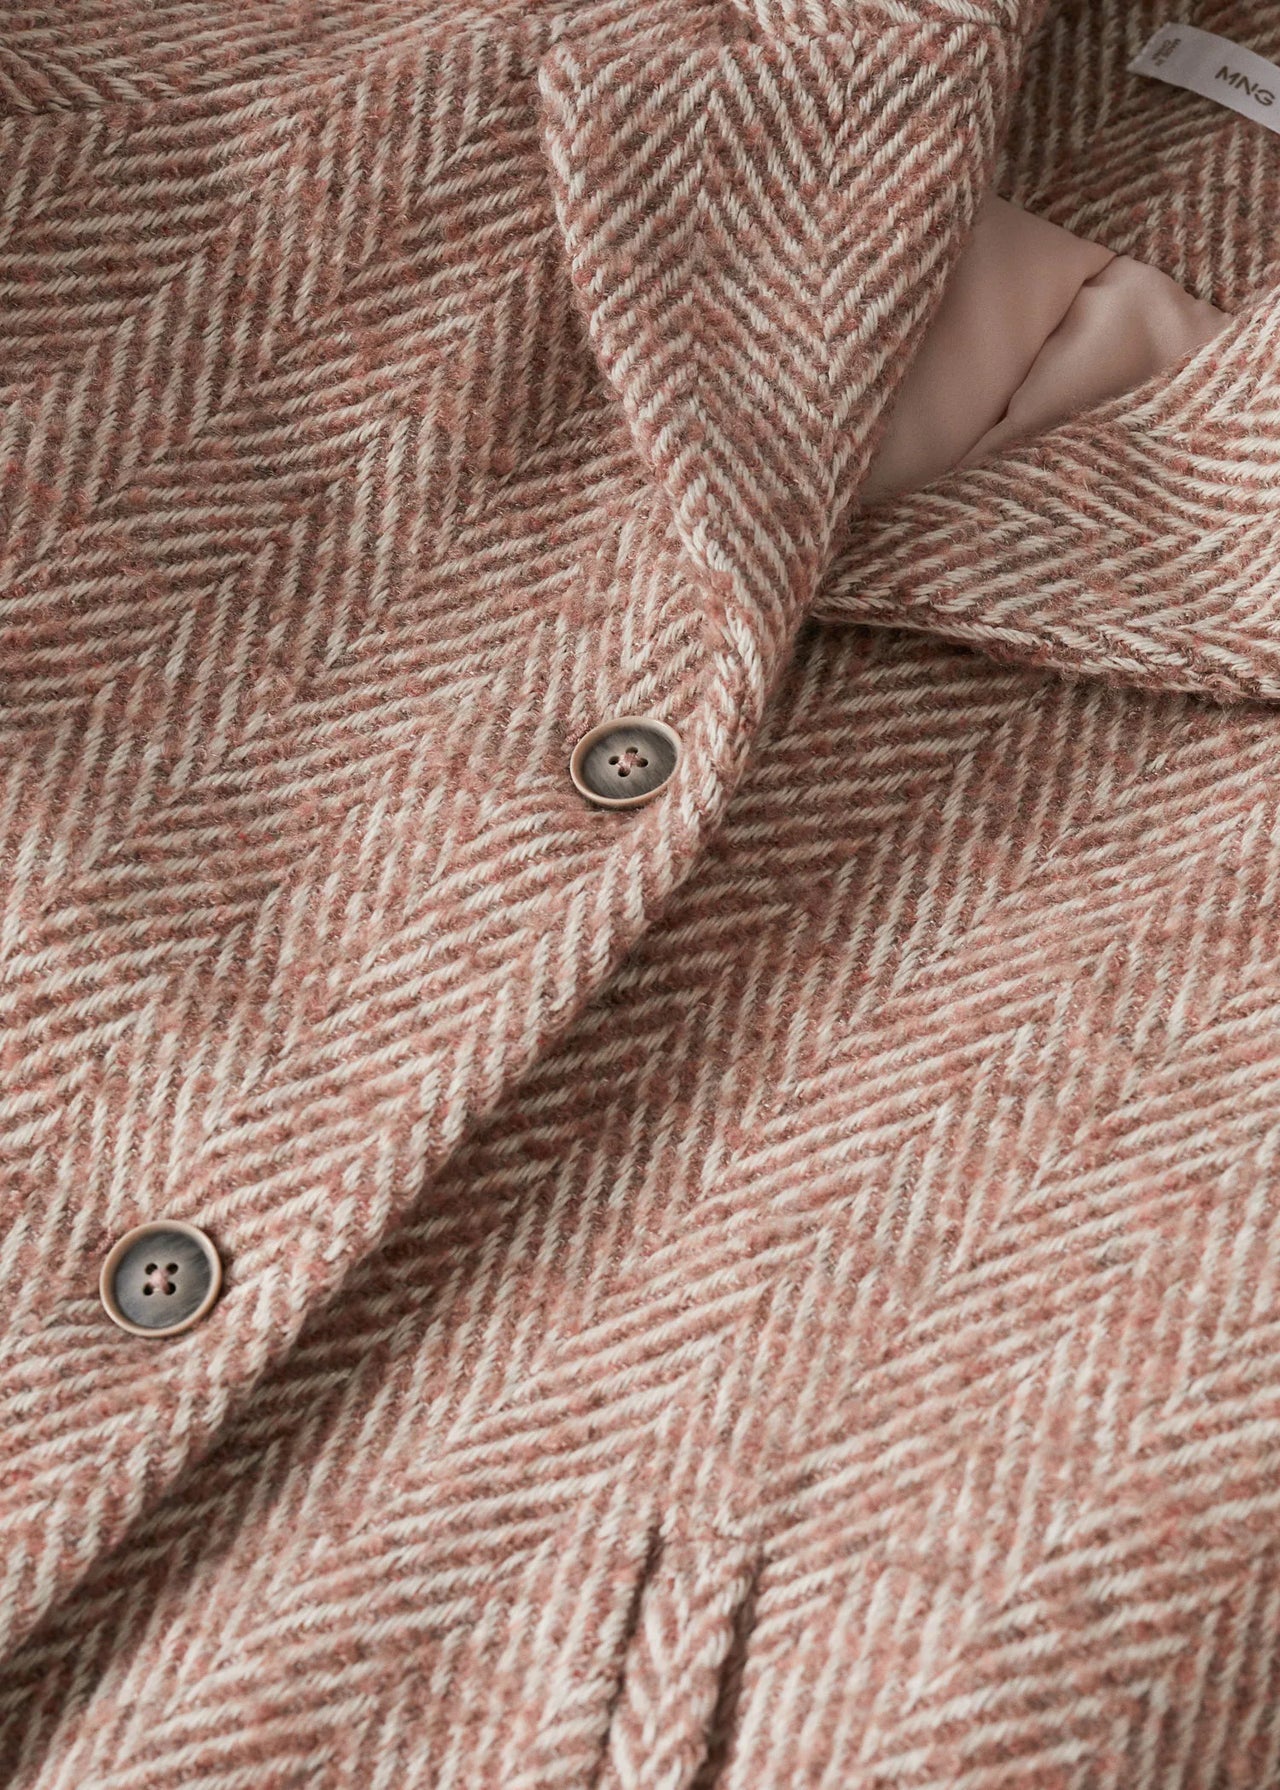 Herringboned fabric coat